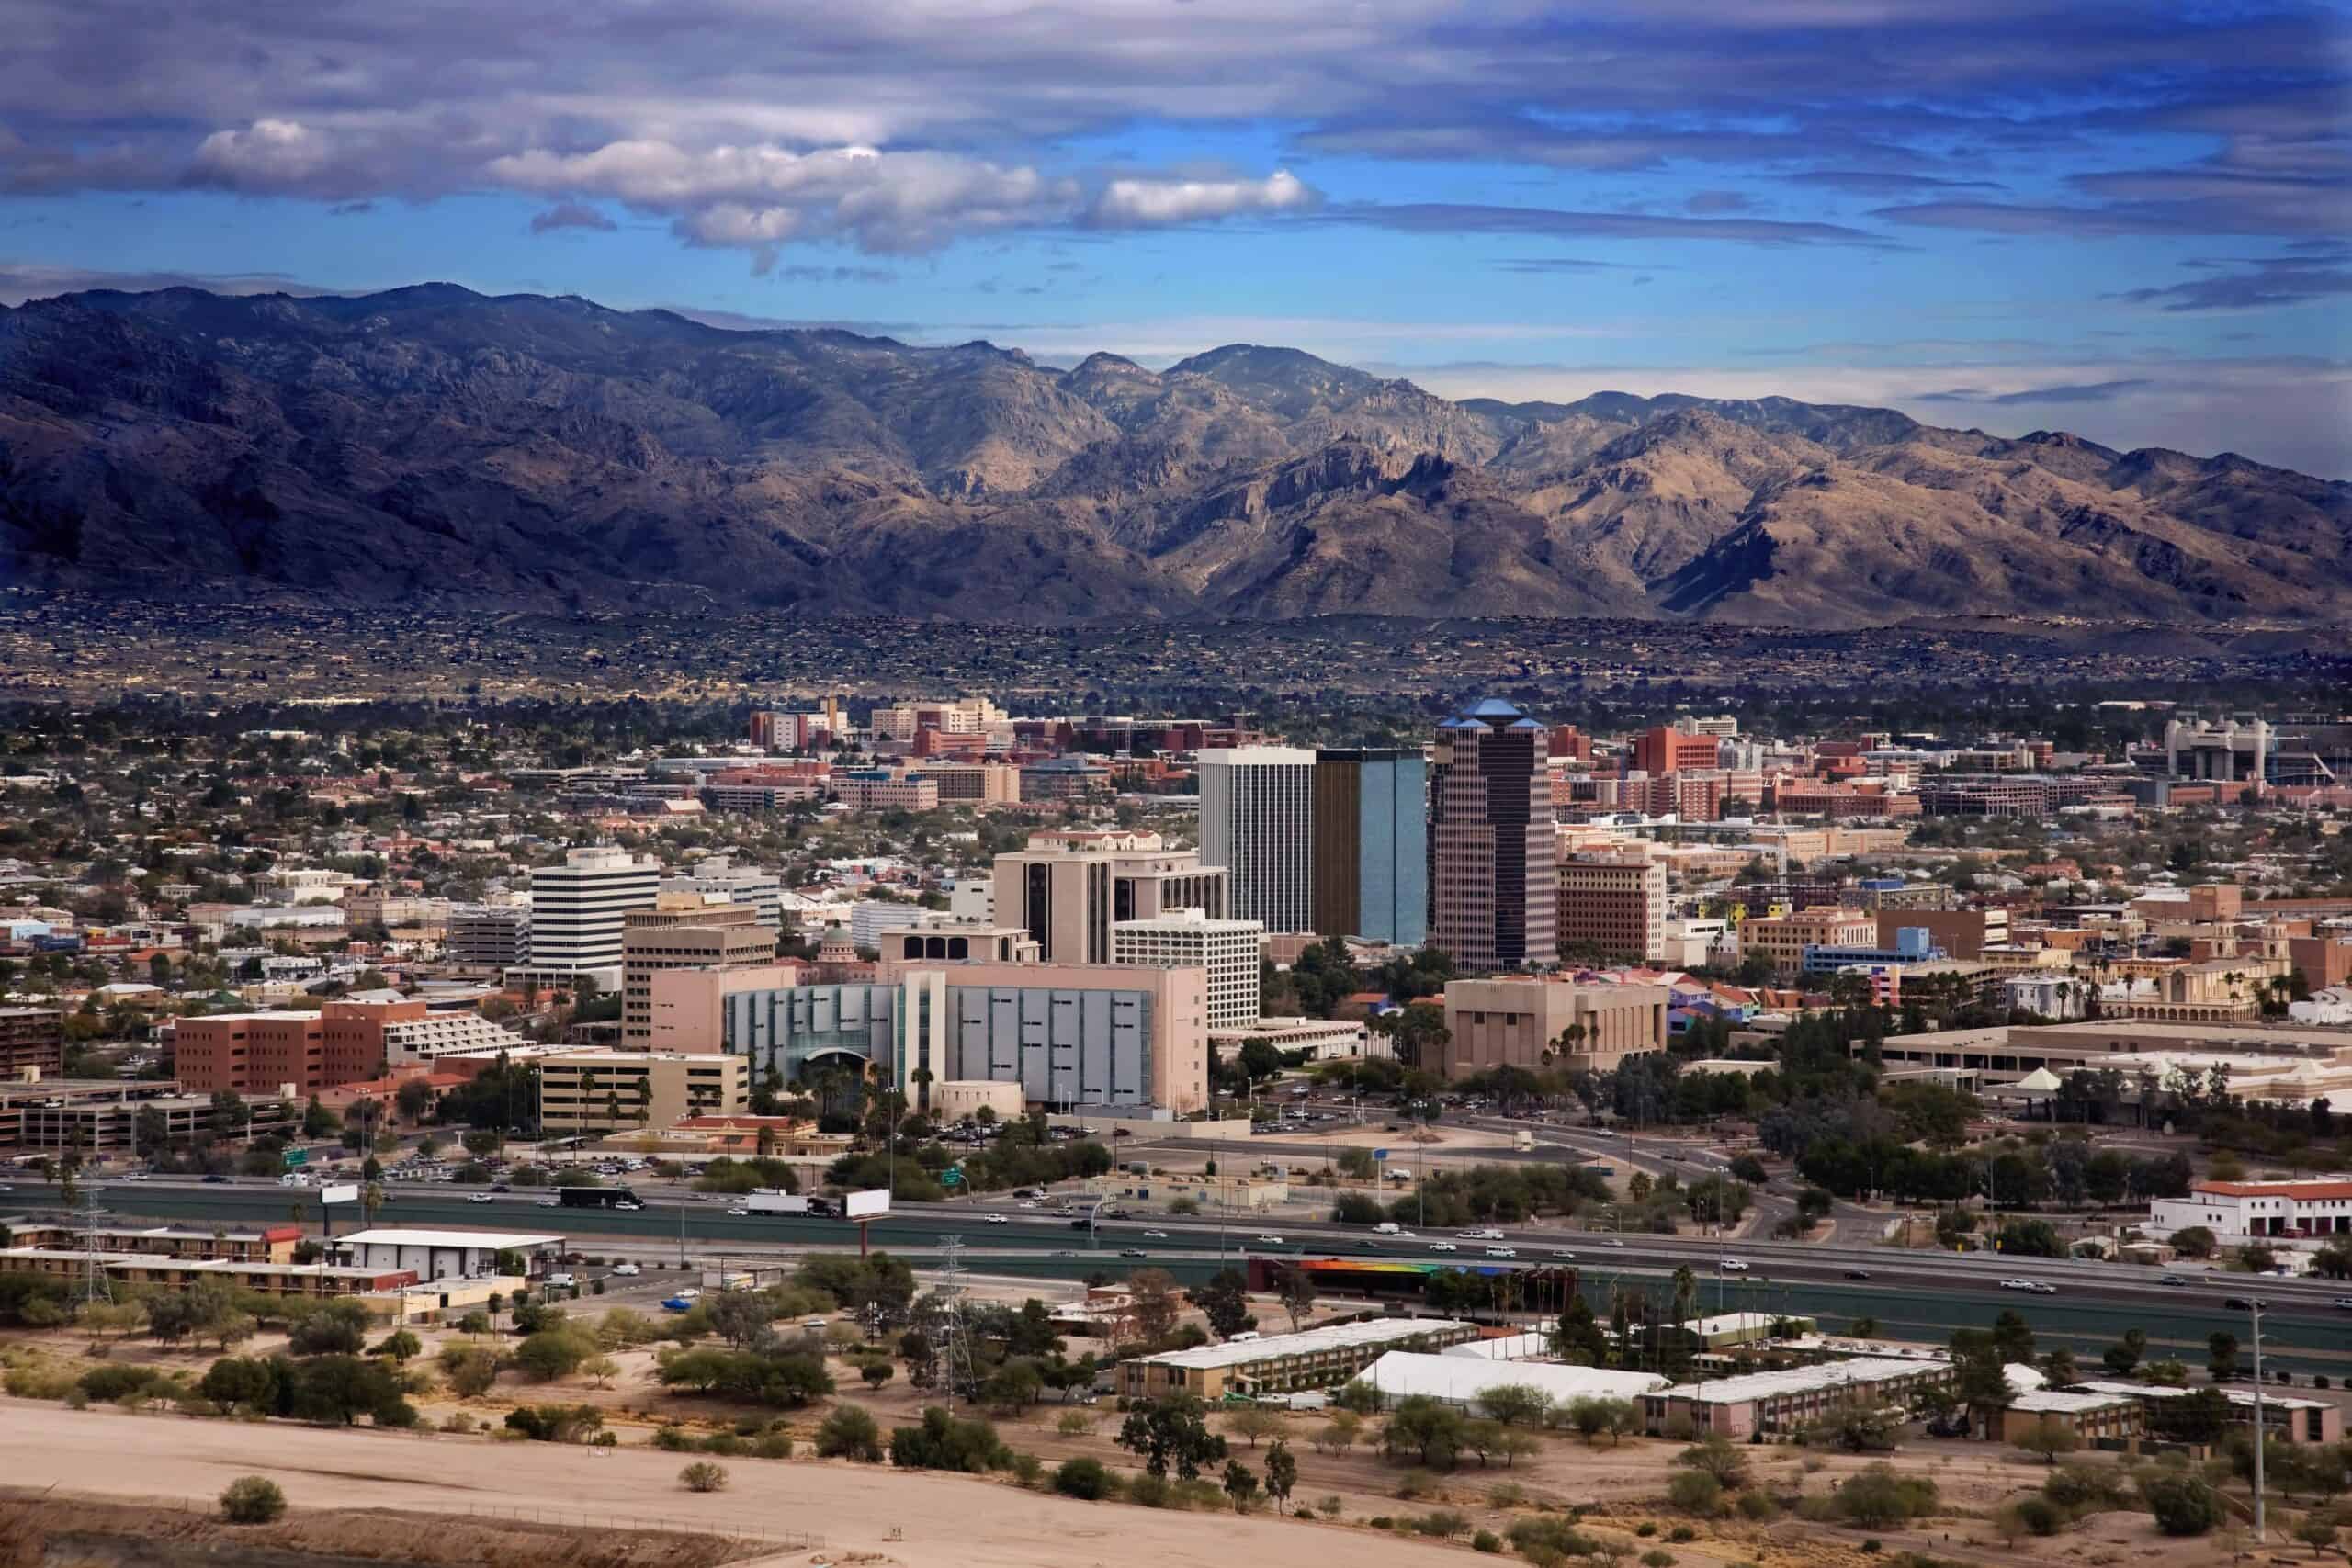 Tucson County Arizona | Scenic view of Tucson Arizona with mountains